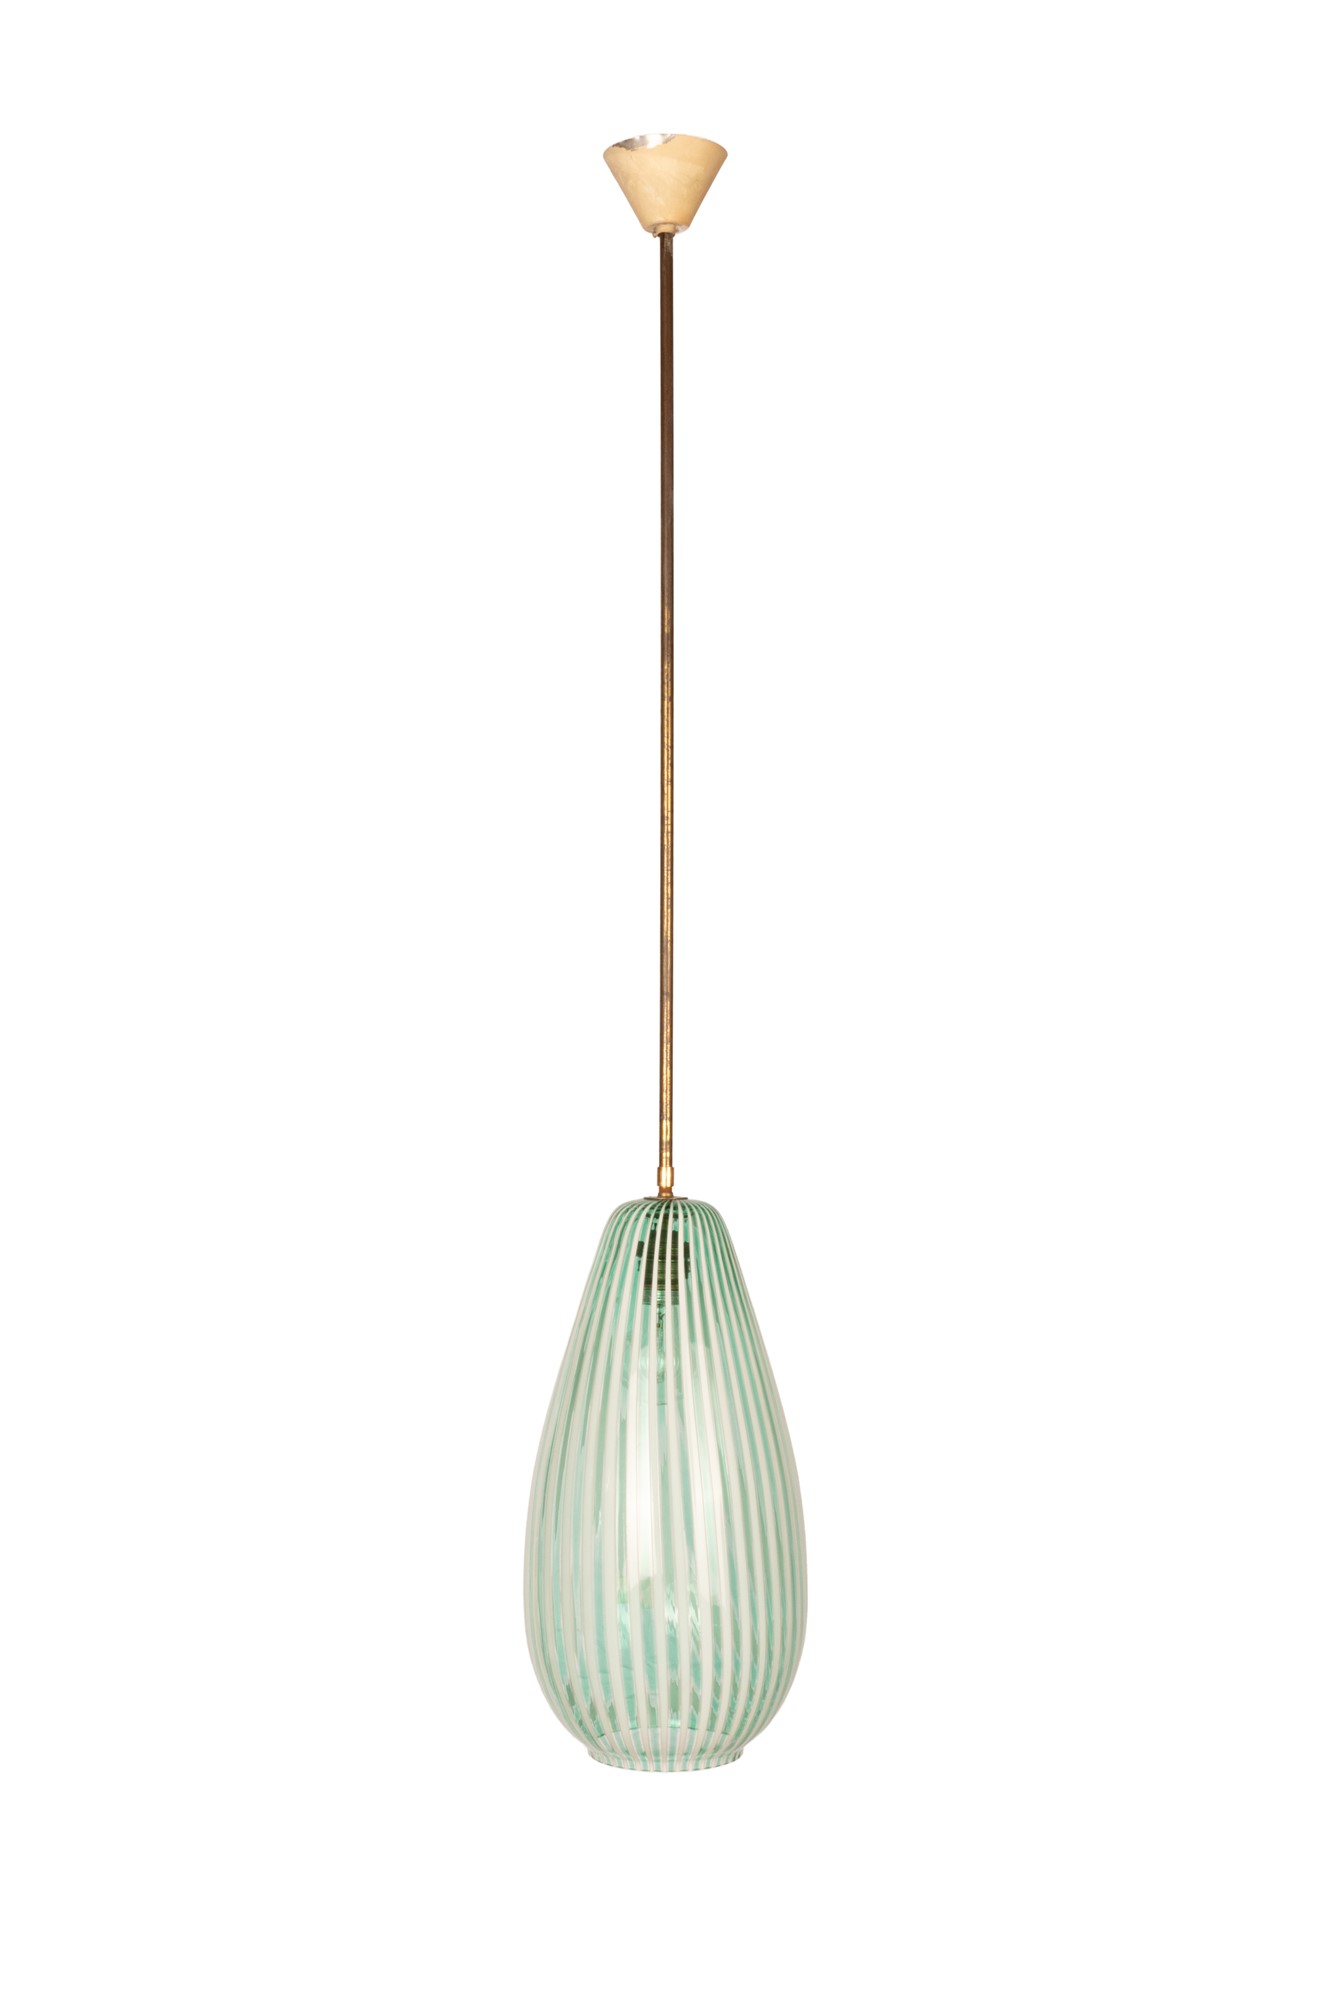 Hanging lamp in zanrifico glass - Image 2 of 16